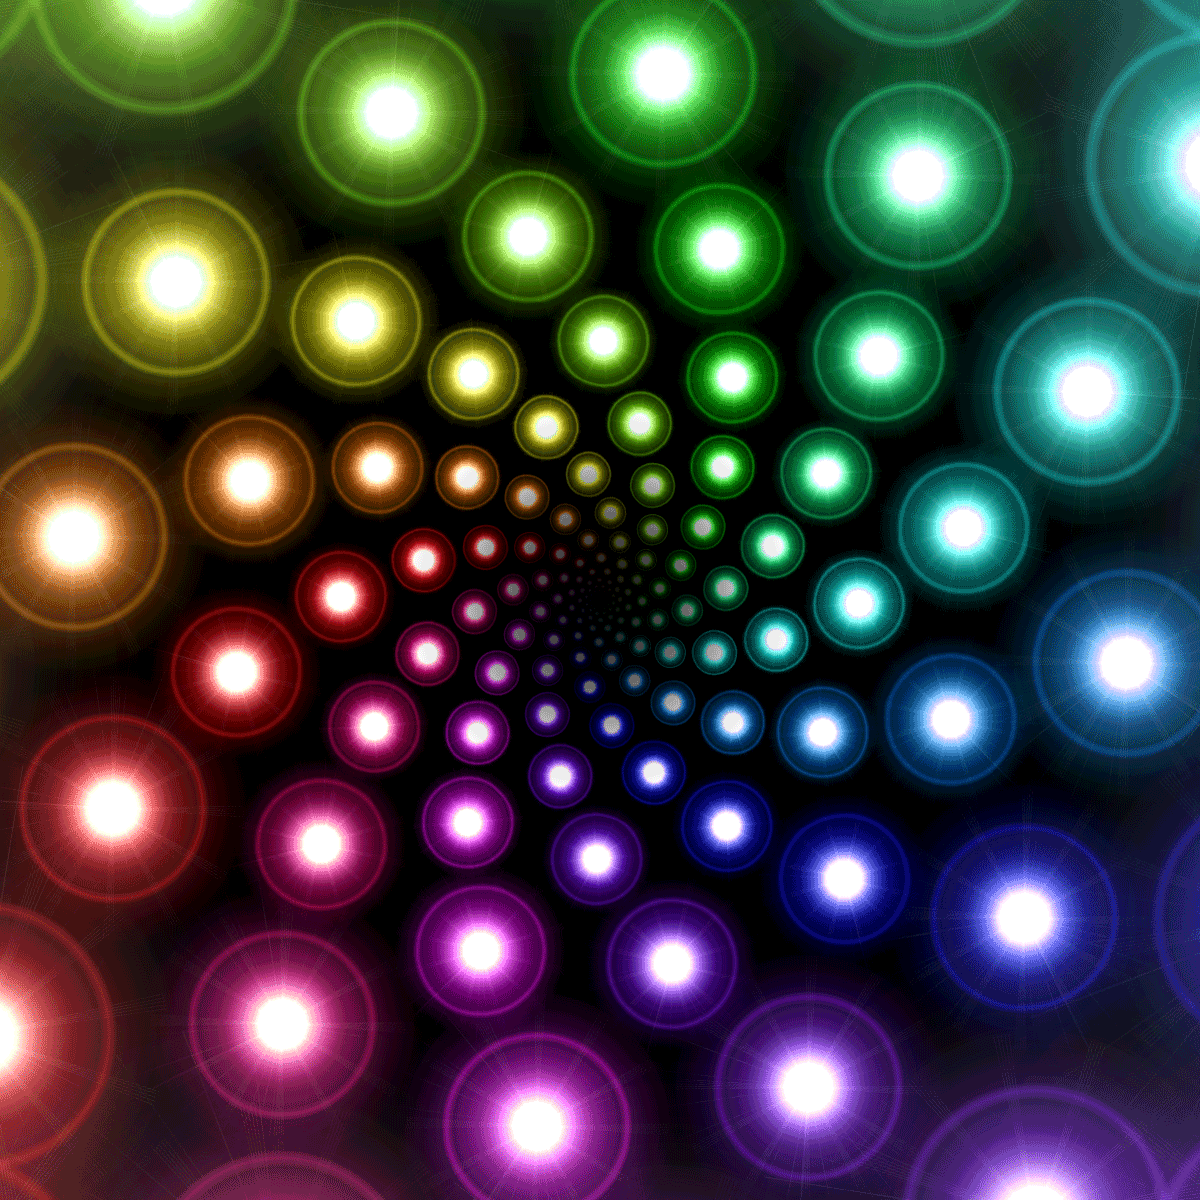 spiral anim 57 by lordsqueak on deviantart fractal art medium